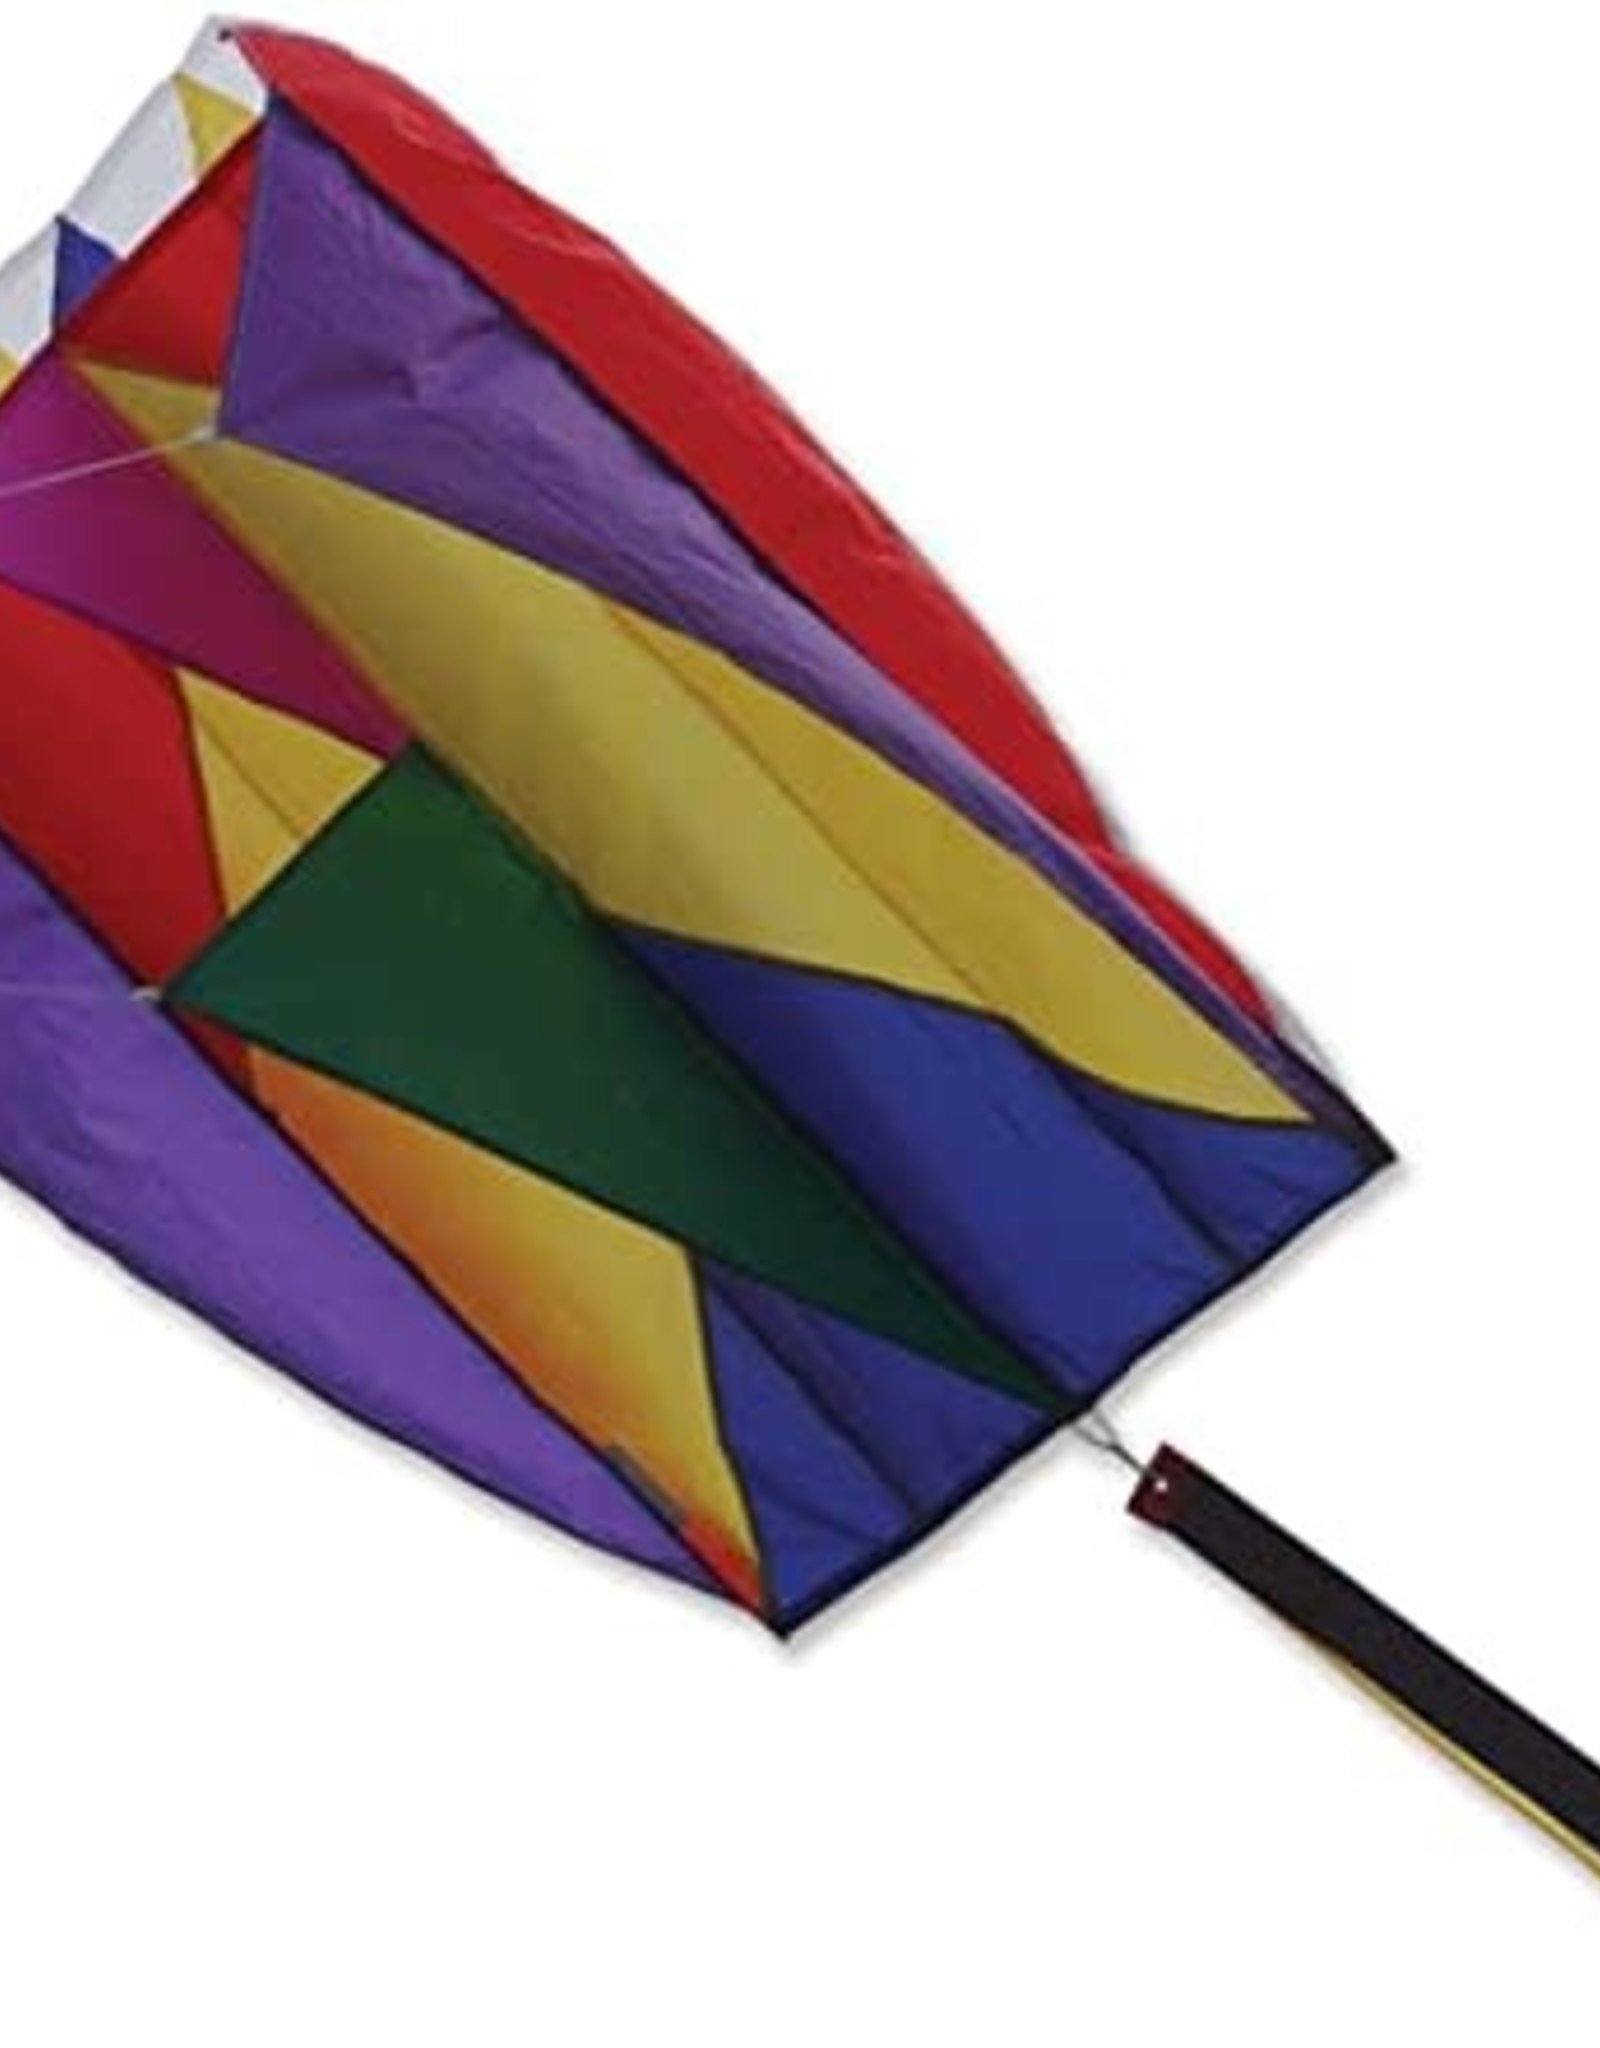 Premier Kites PARAFOIL 5 - RAINBOW